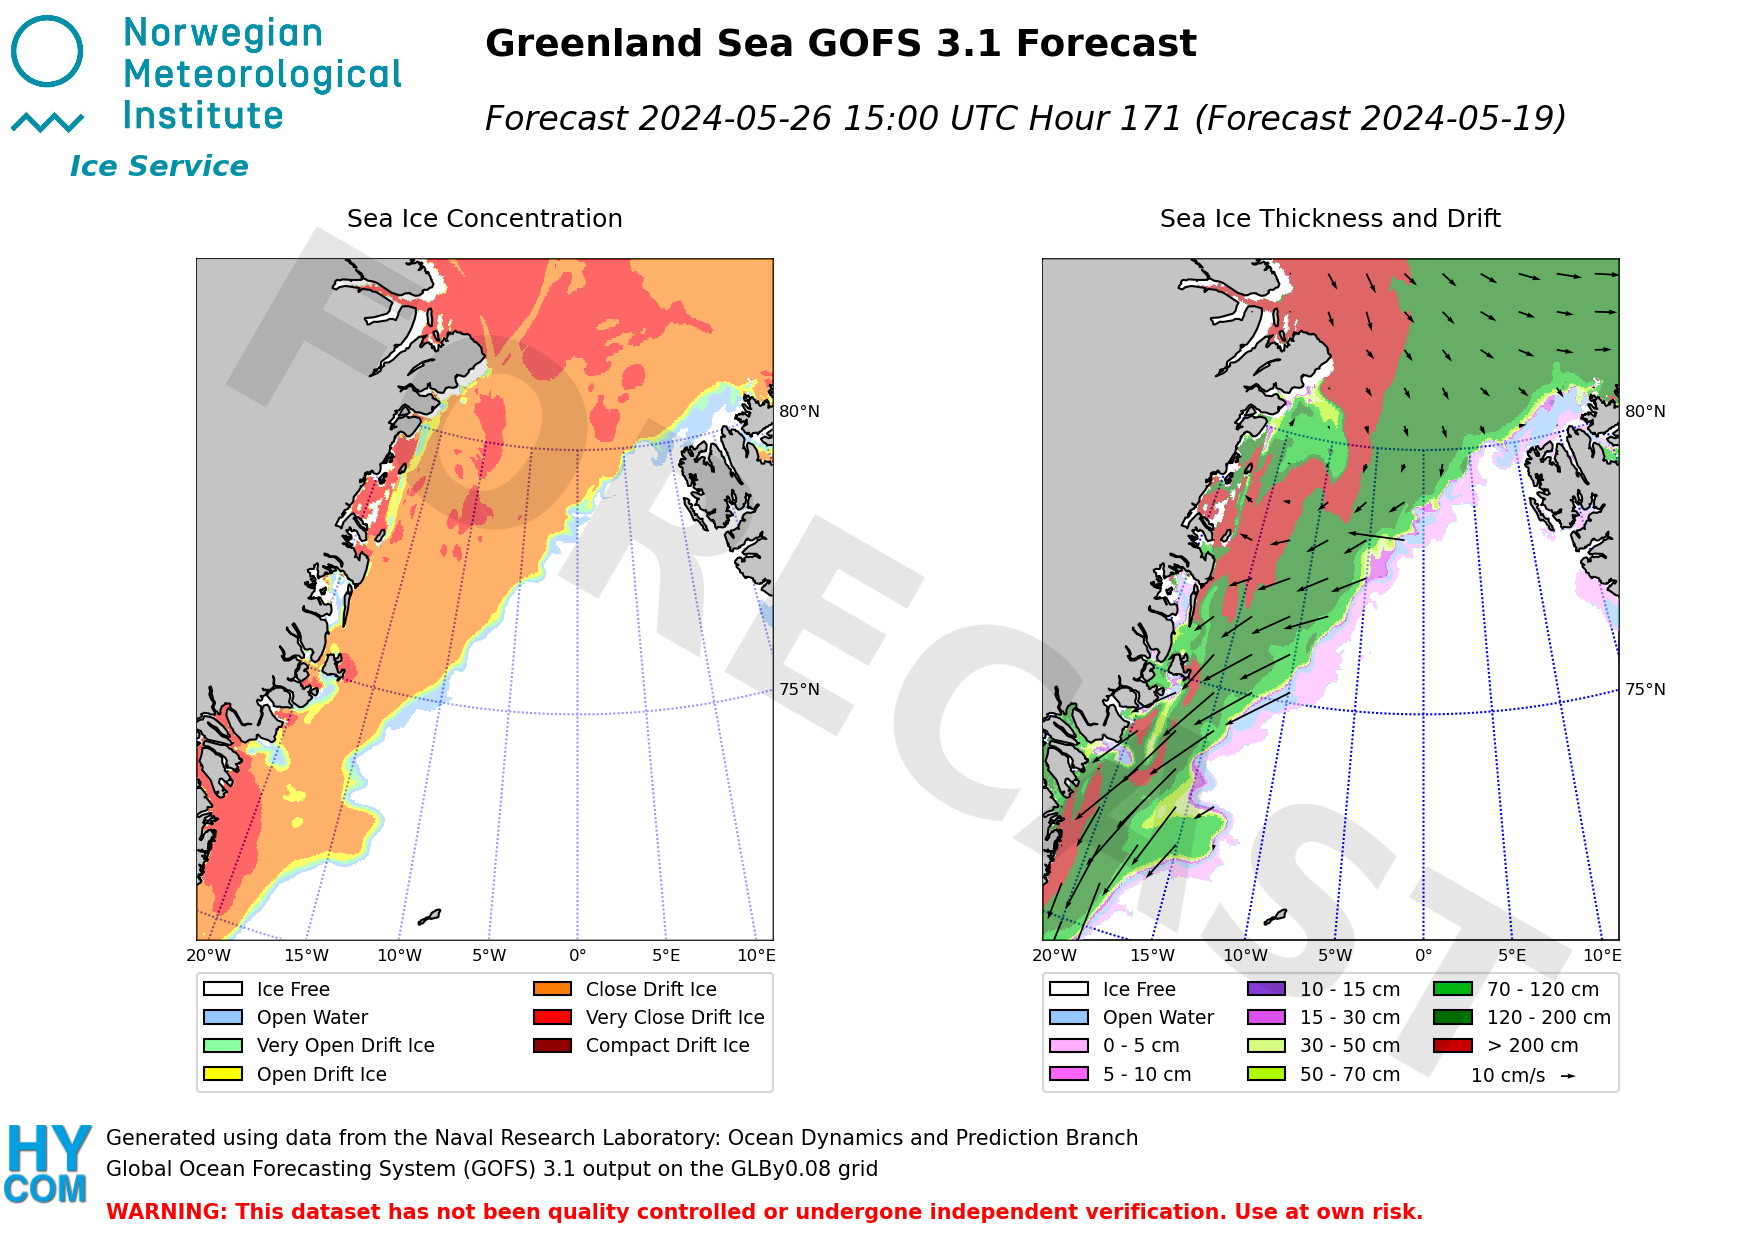 Latest GOF3.1 6-day forecast